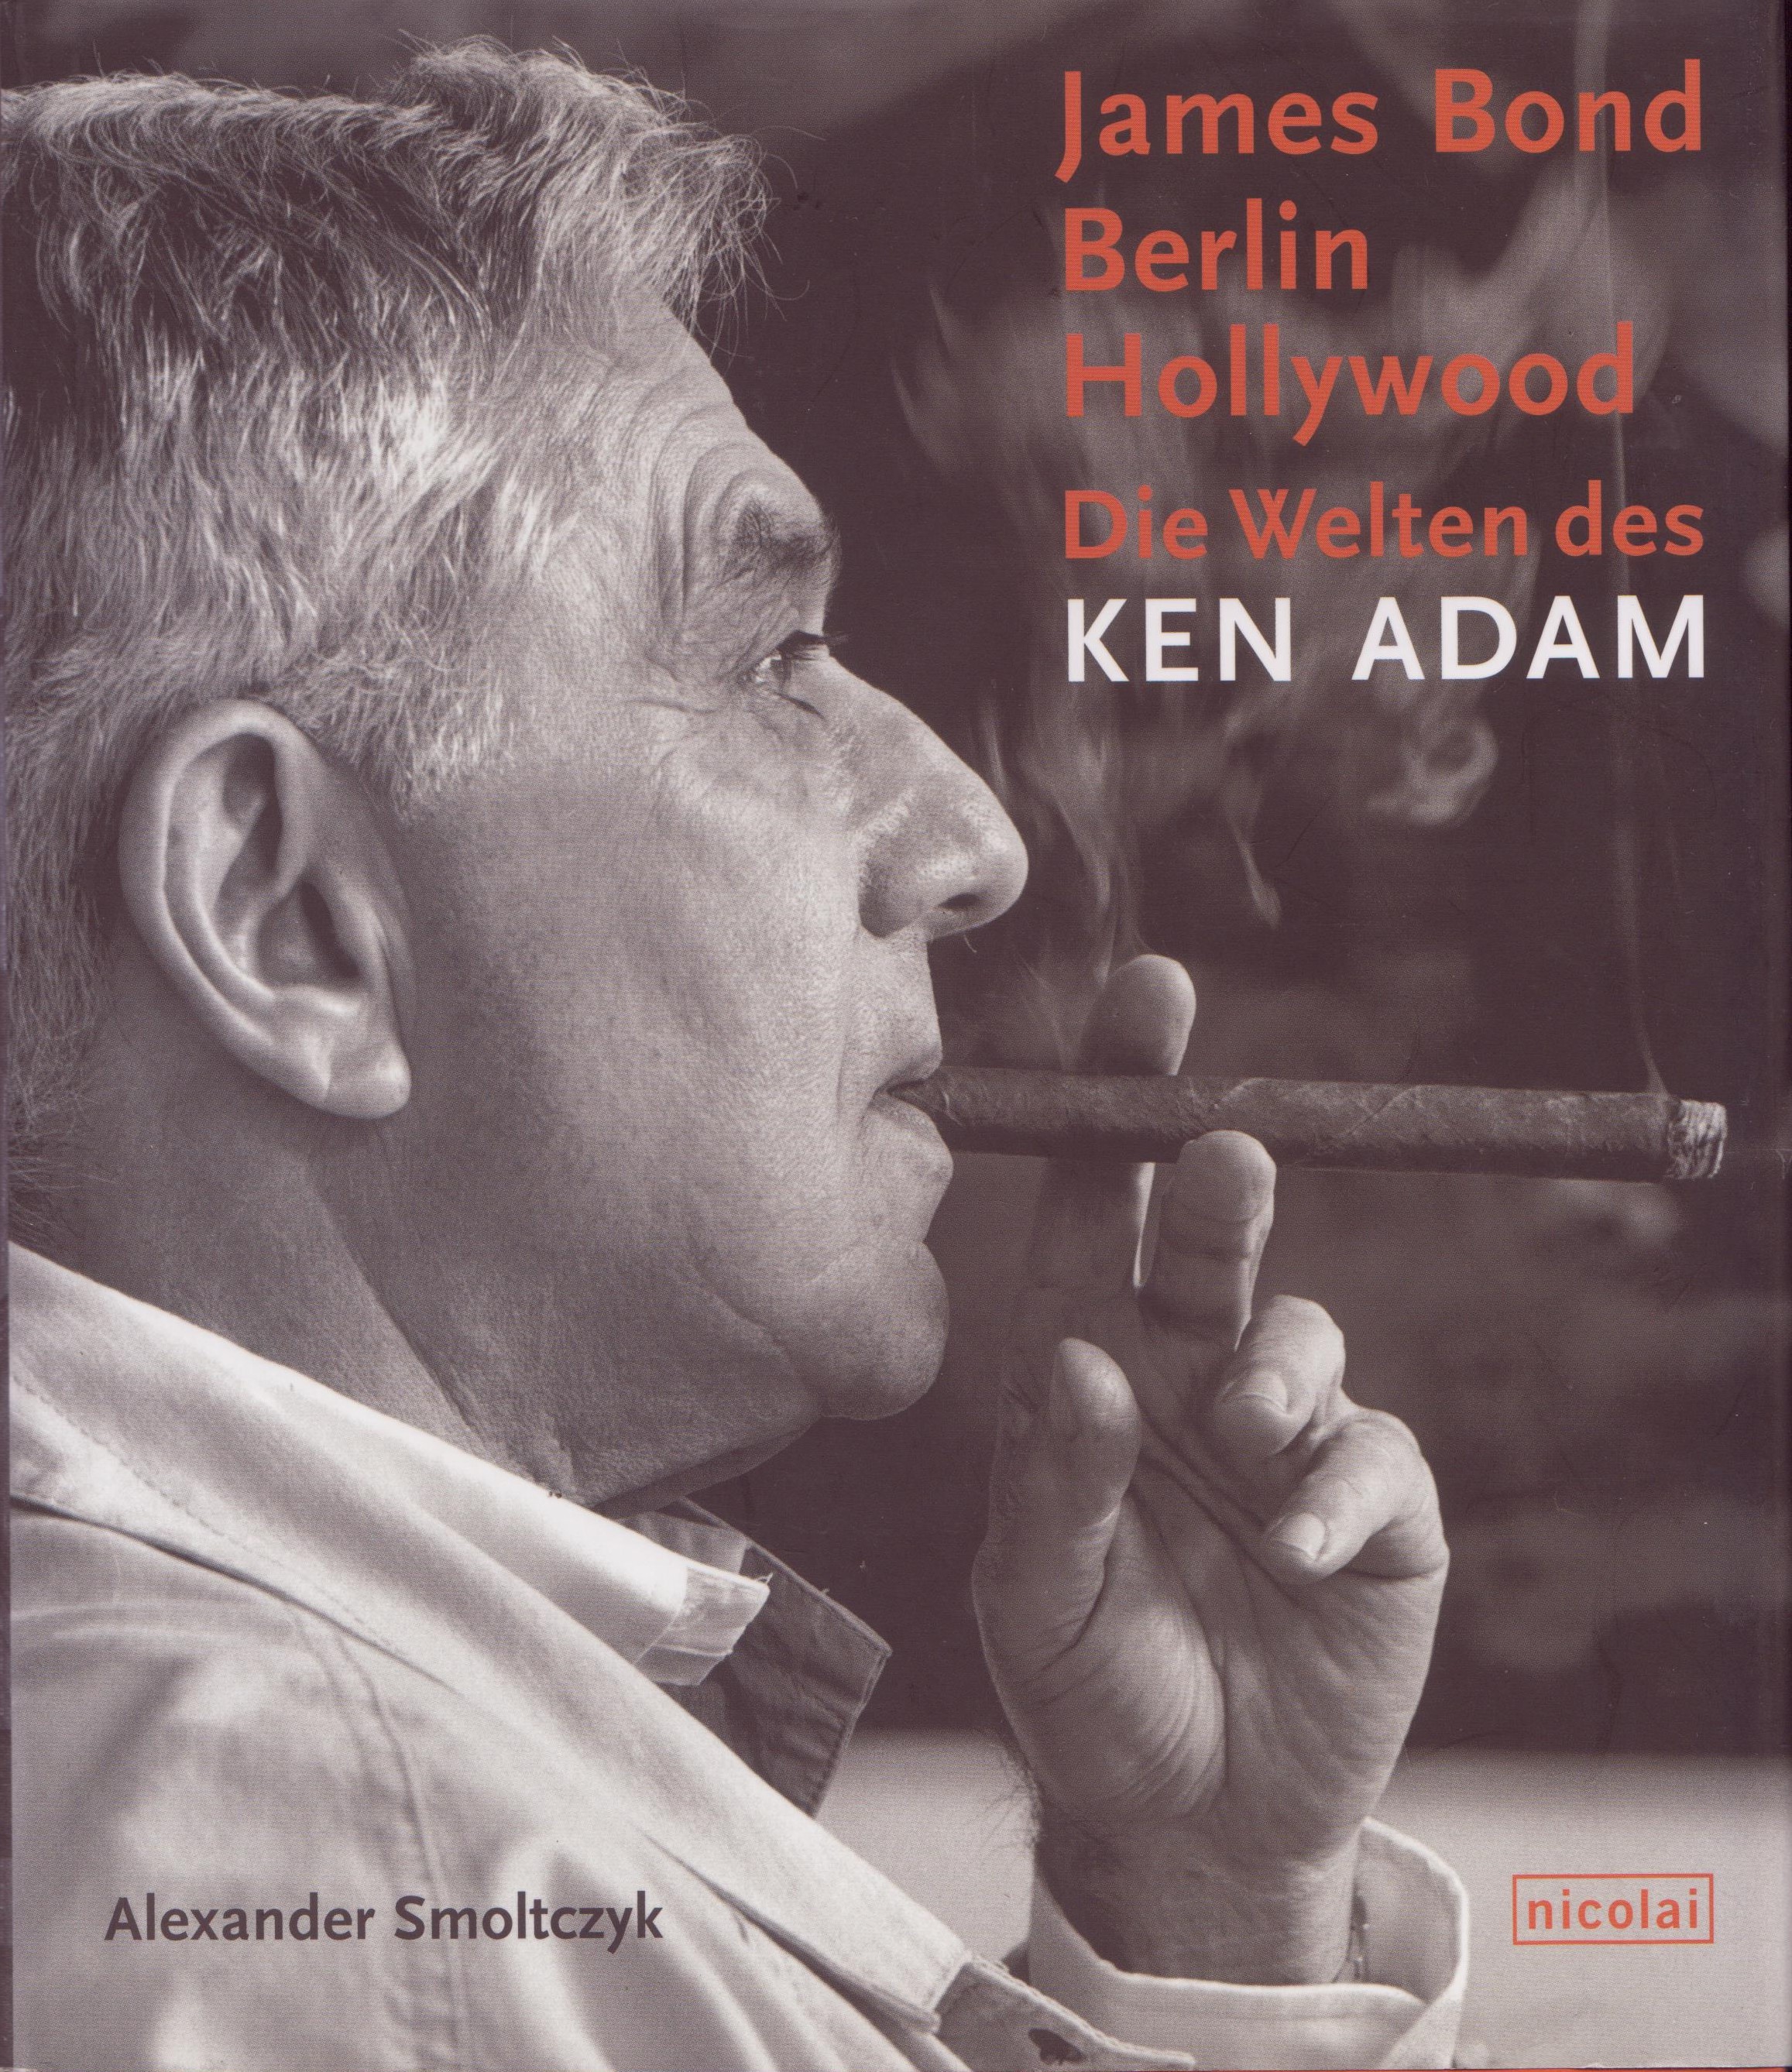 Udgivet af Nicolaische Verlagsbuchhandlung 2002